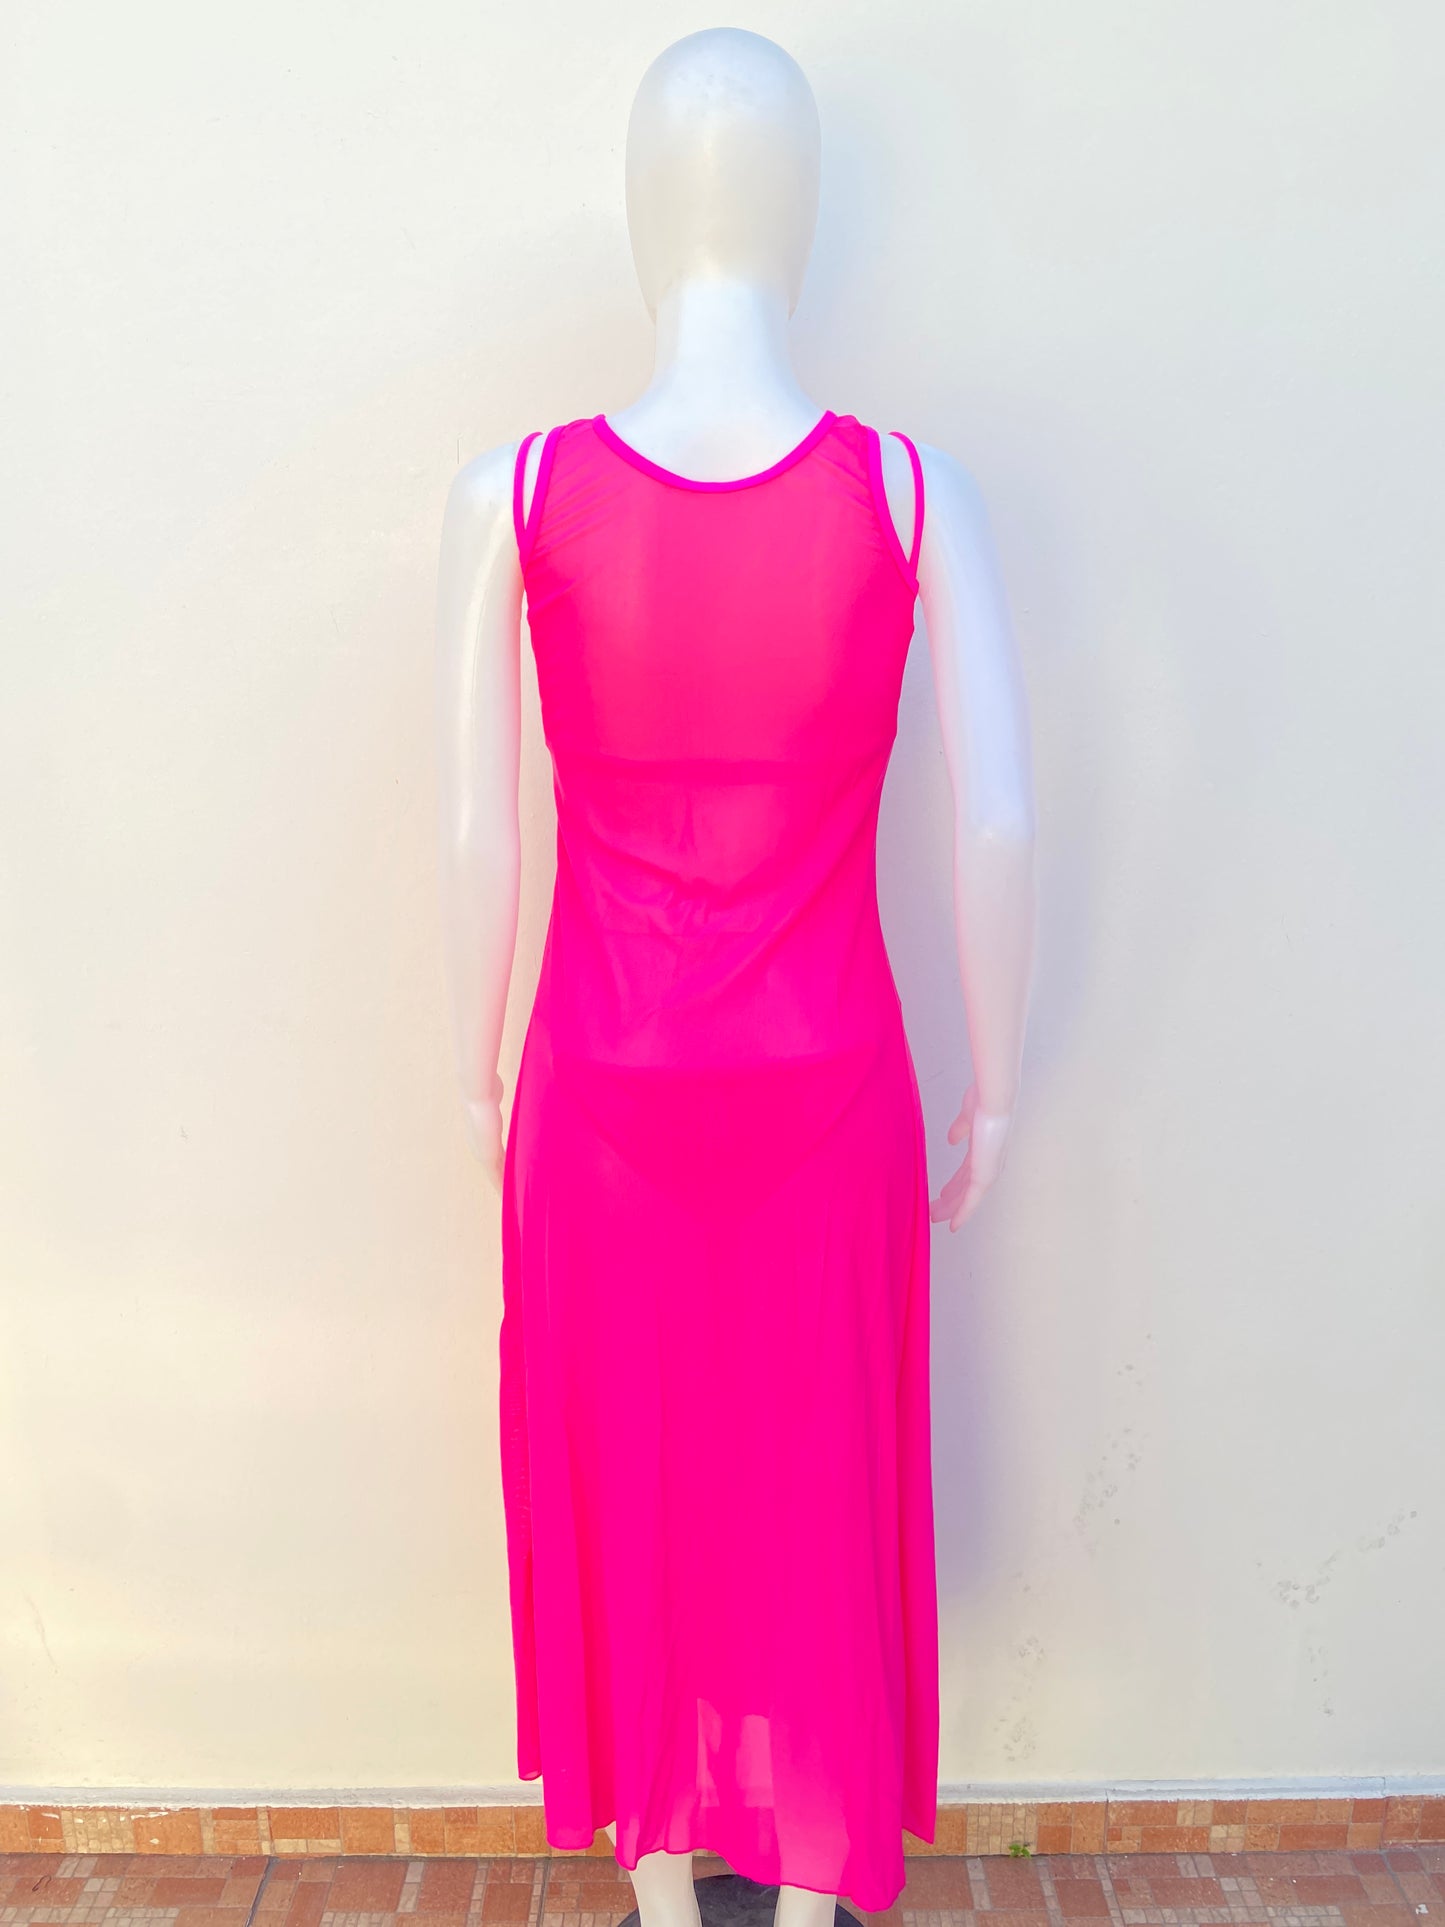 Biquini Fashion Nova original rosado, de 3 piezas y salida estilo vestido.